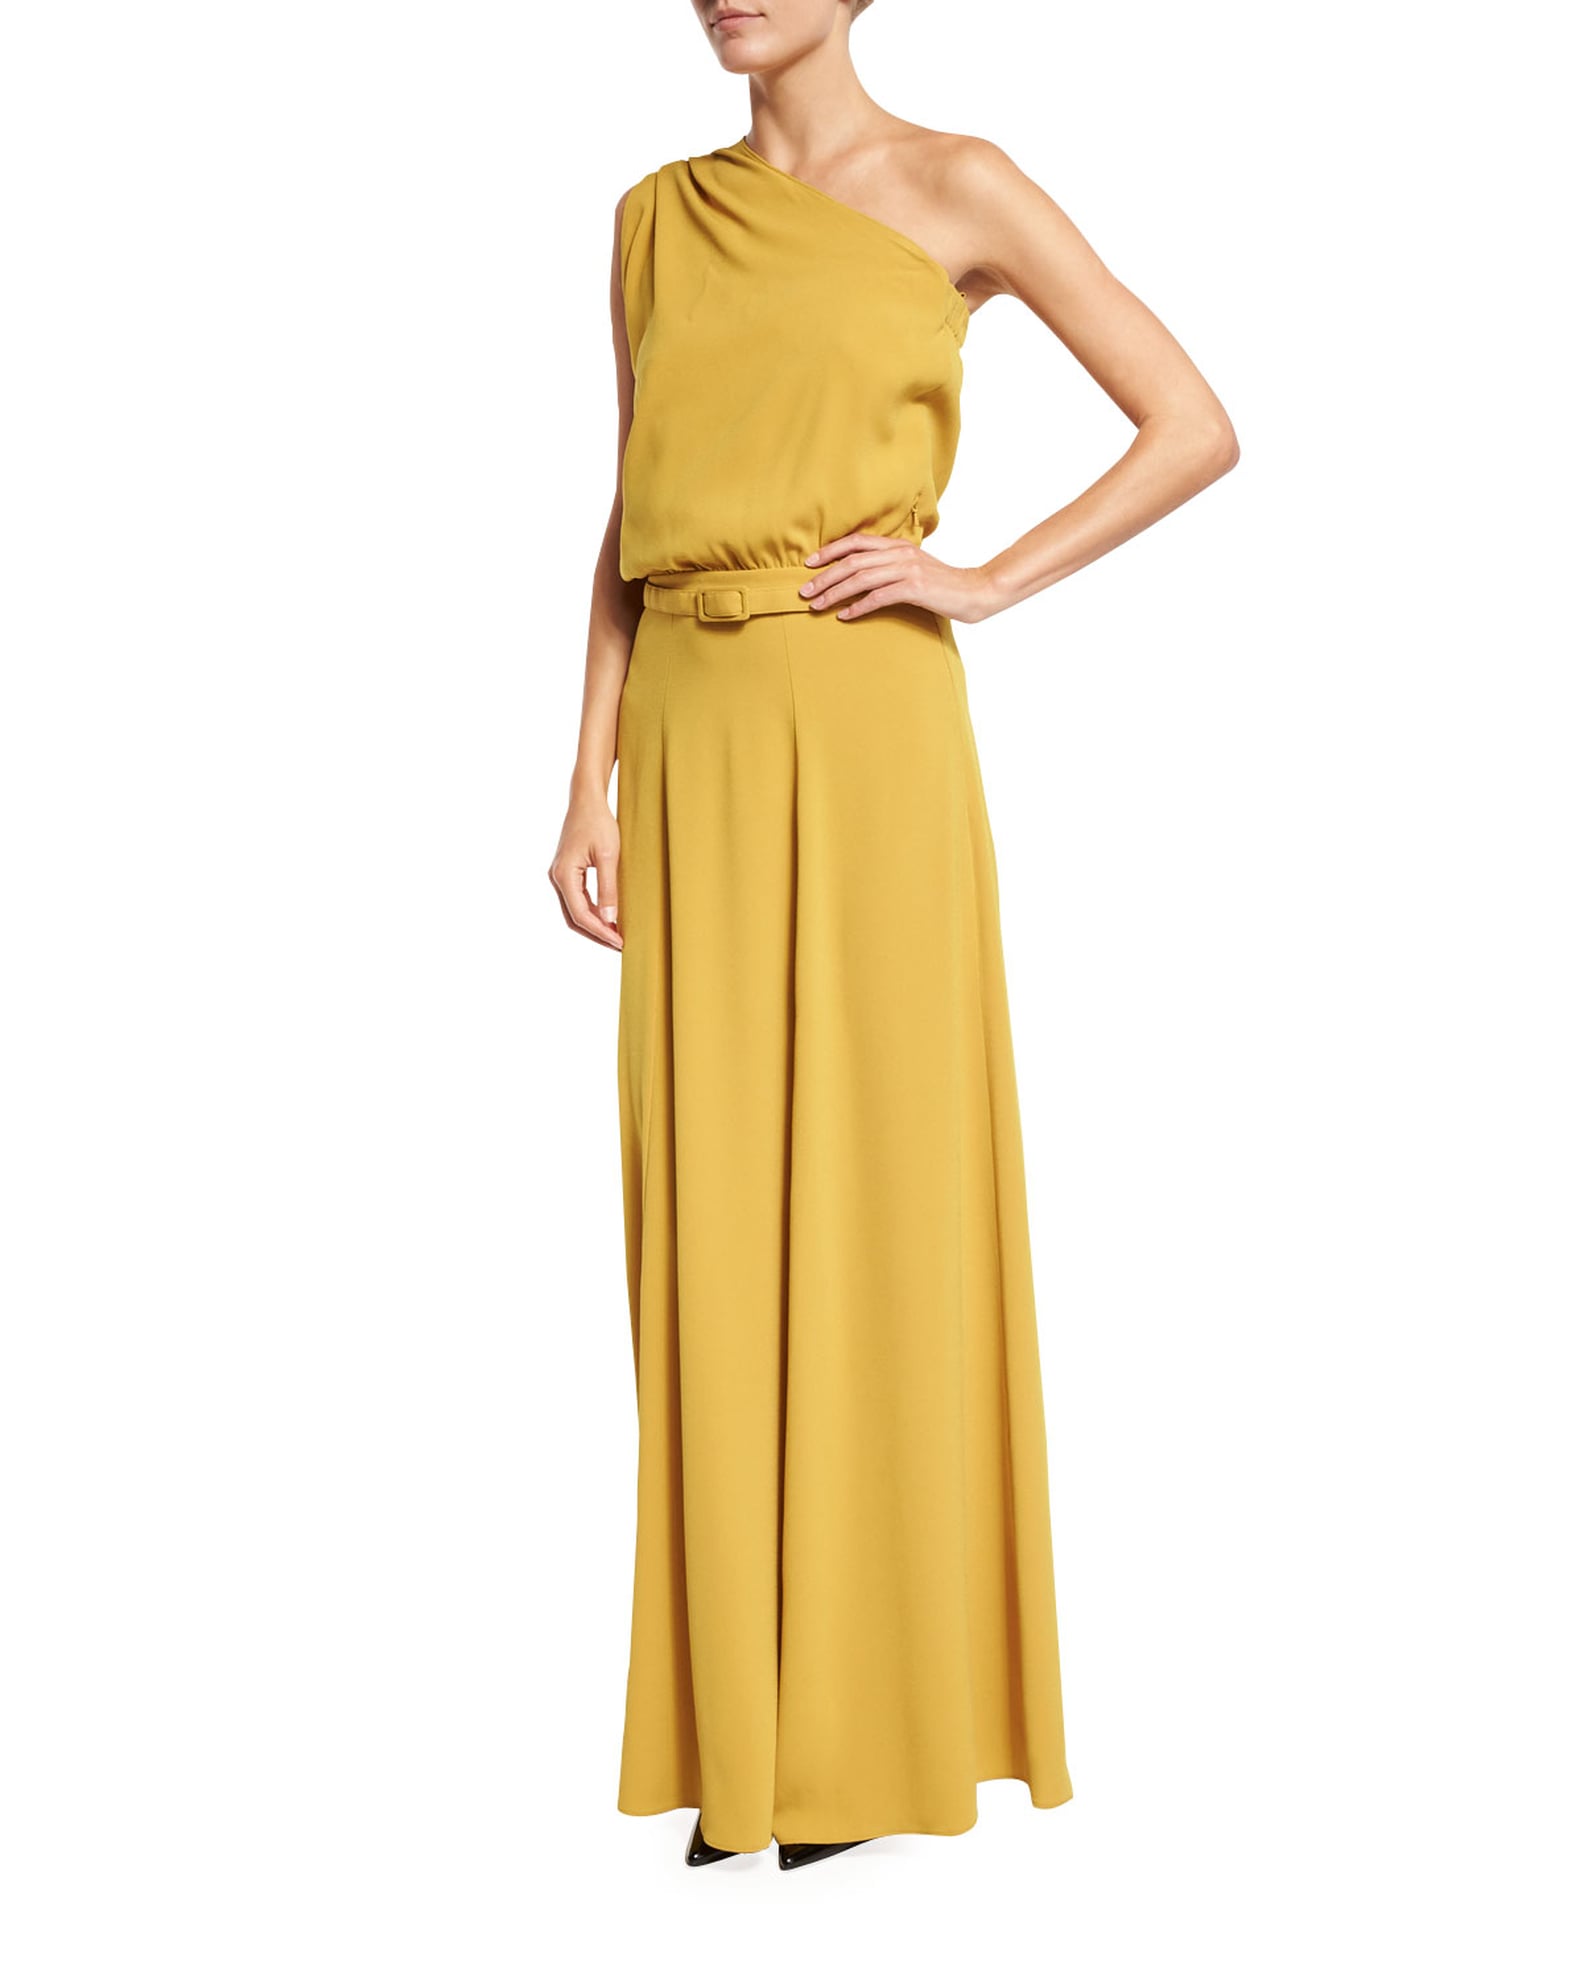 Angelina Jolie's Yellow Co Dress | POPSUGAR Fashion